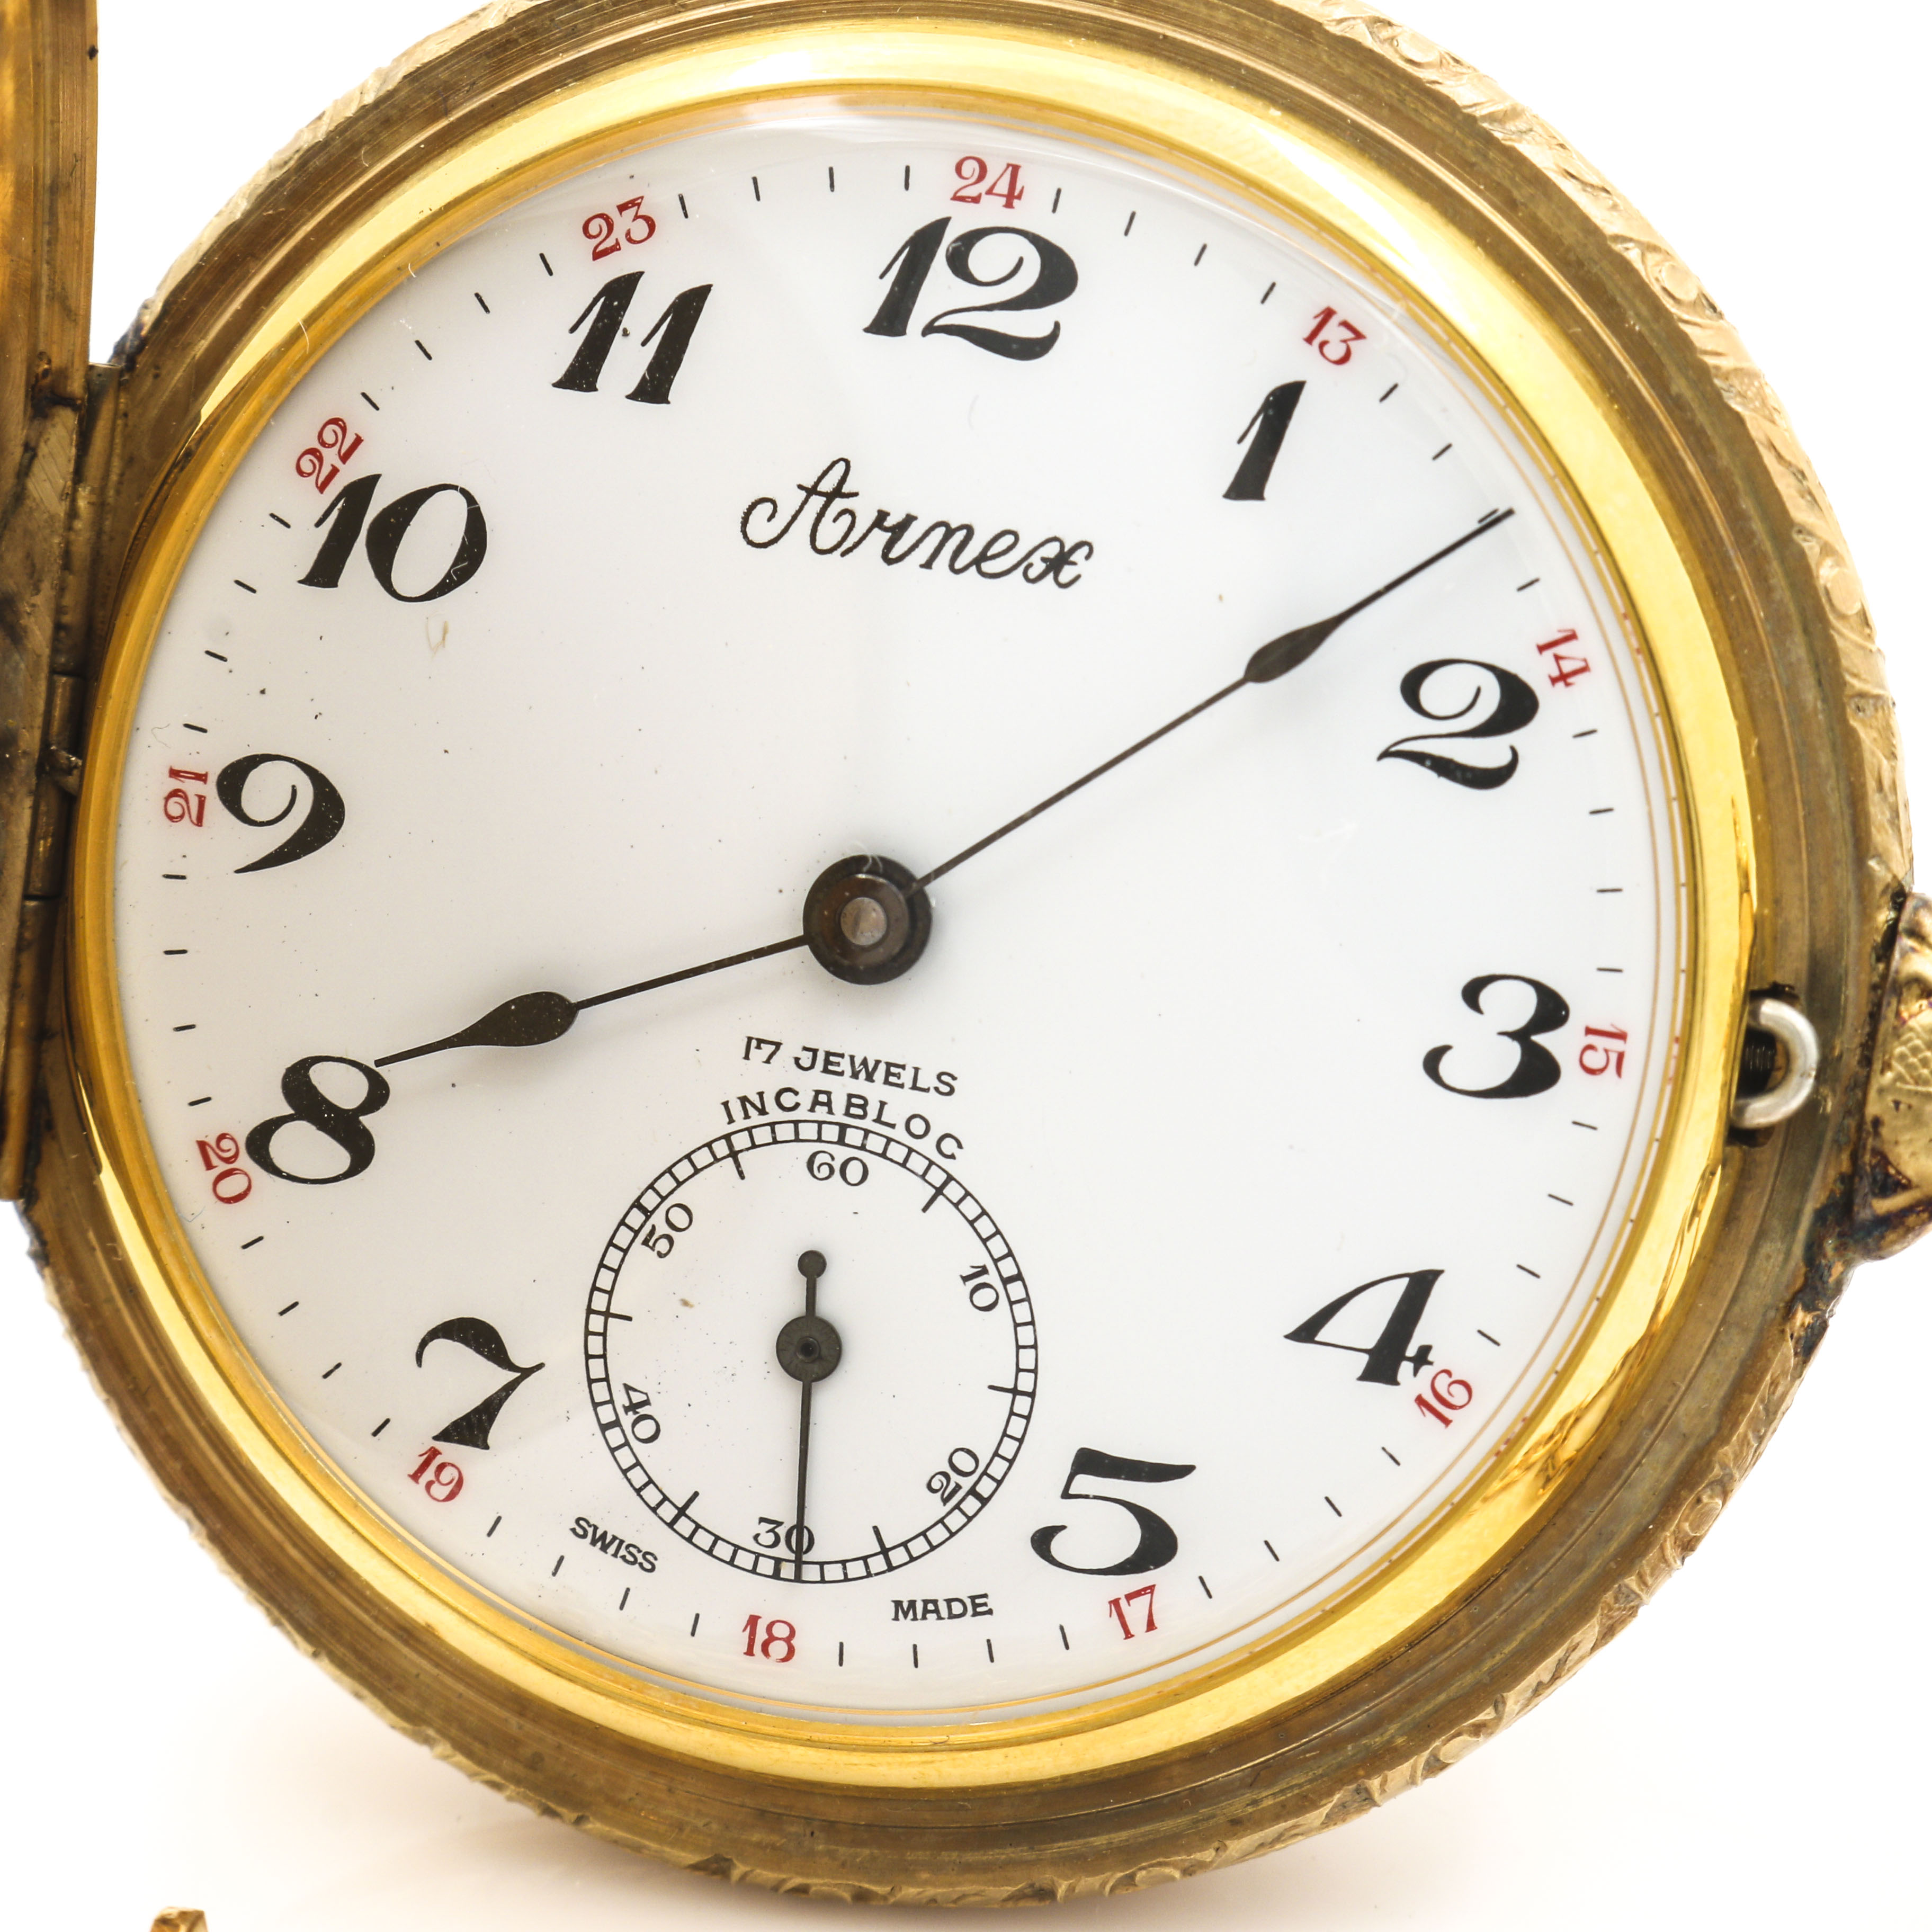 arnex 17 jewels incabloc pocket watch with 60 hr dial